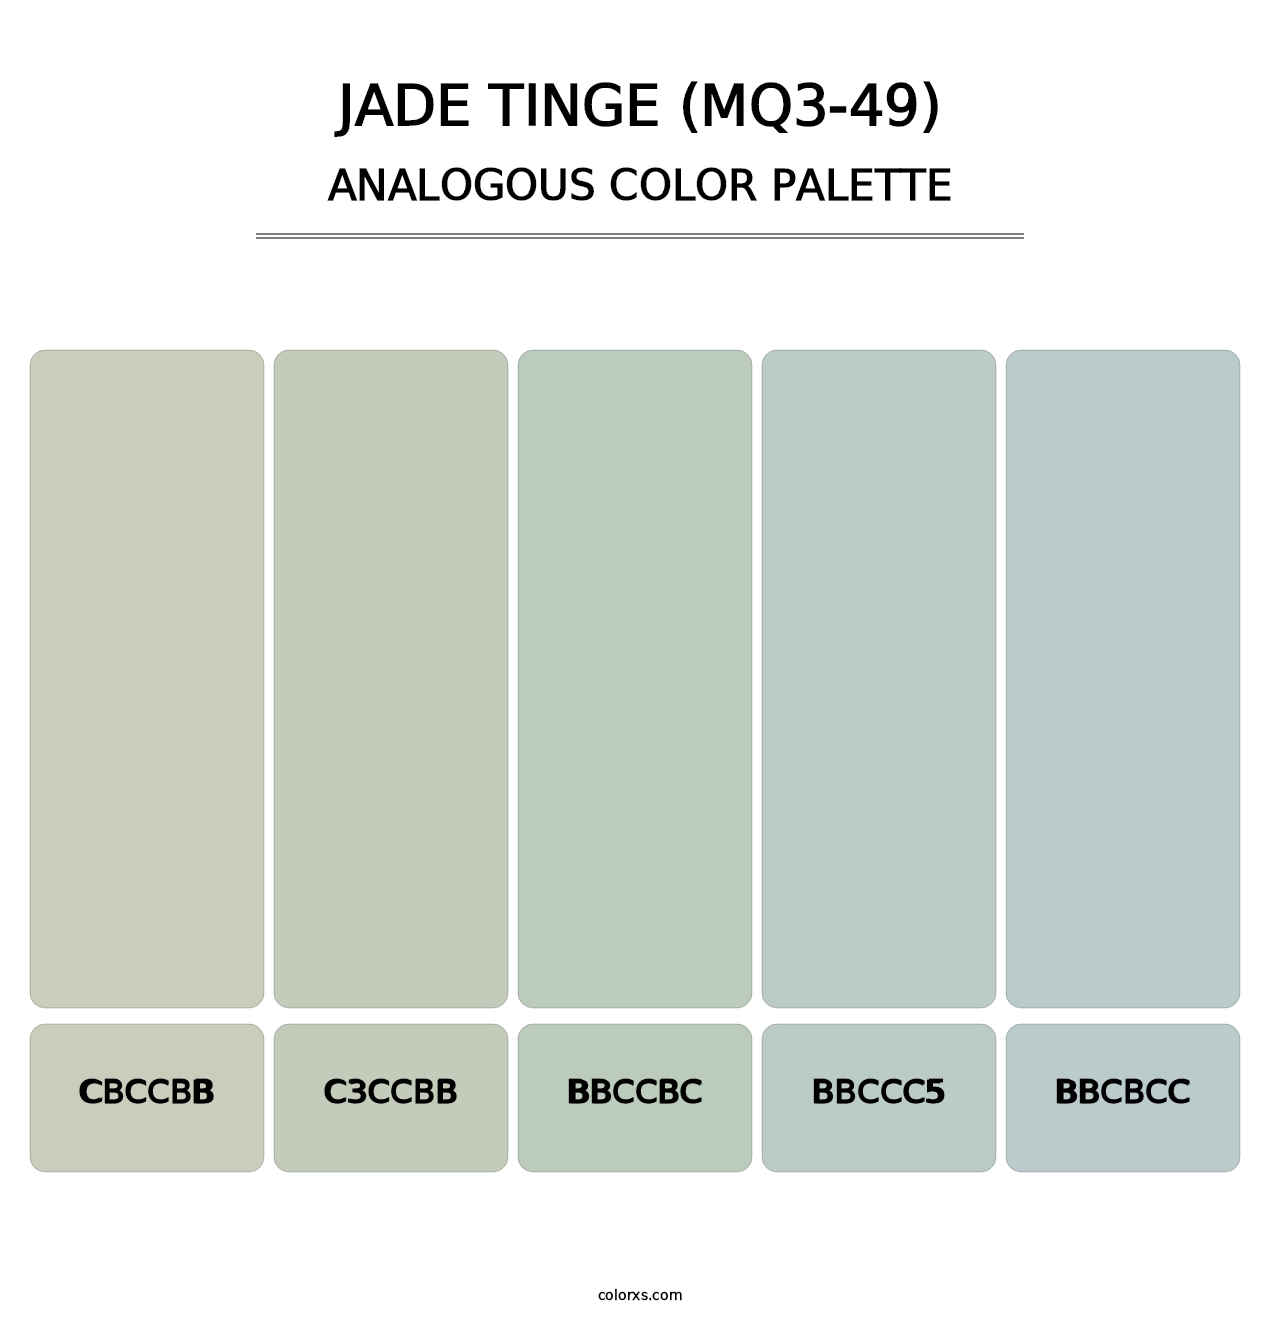 Jade Tinge (MQ3-49) - Analogous Color Palette